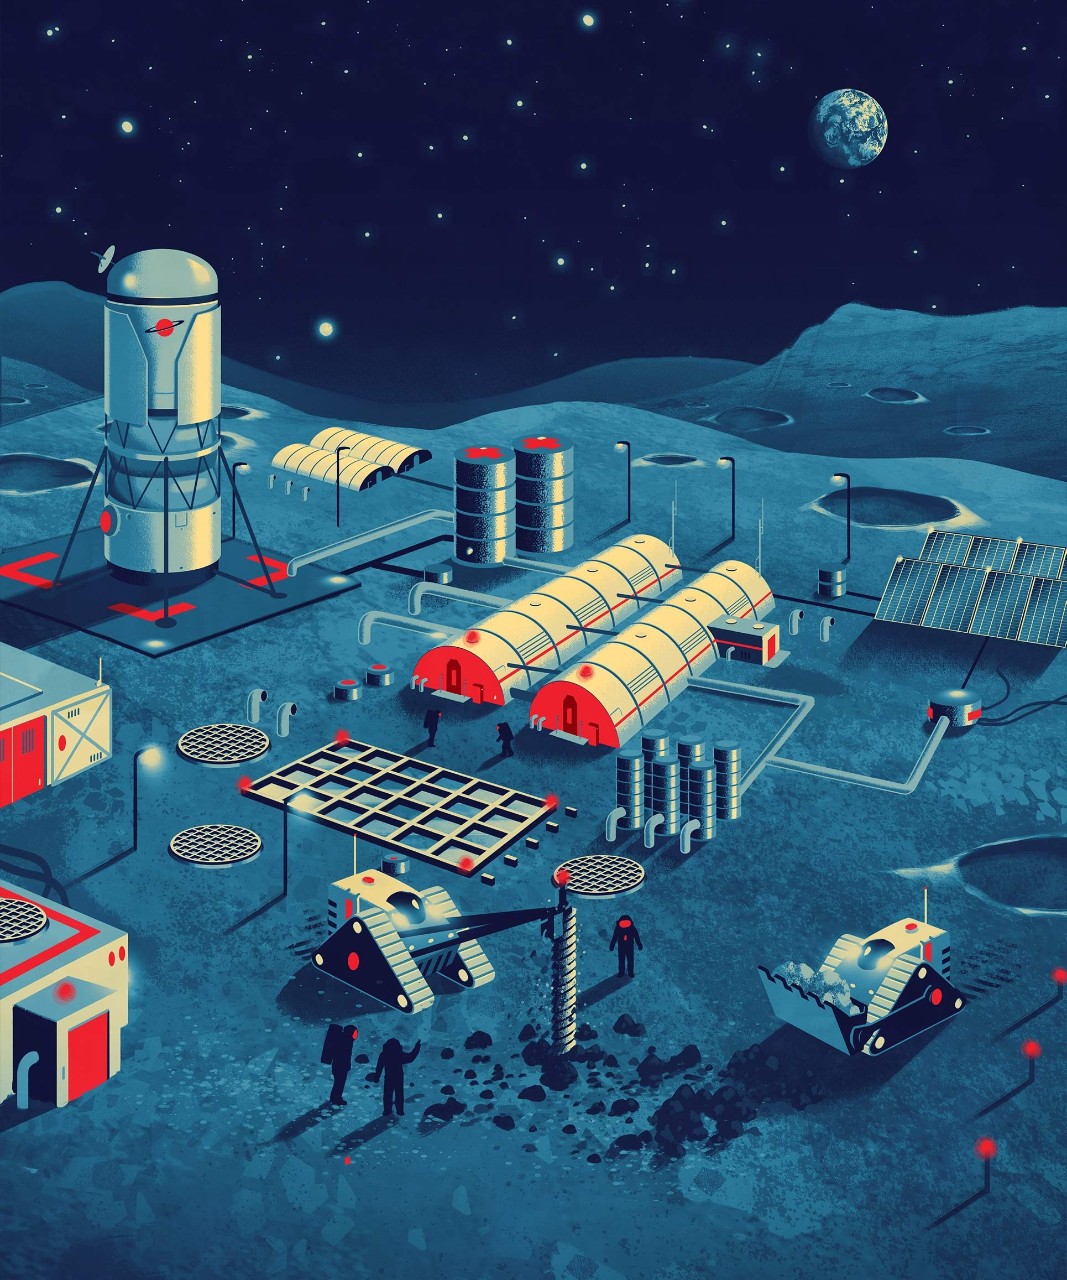 Moon station - Graphics